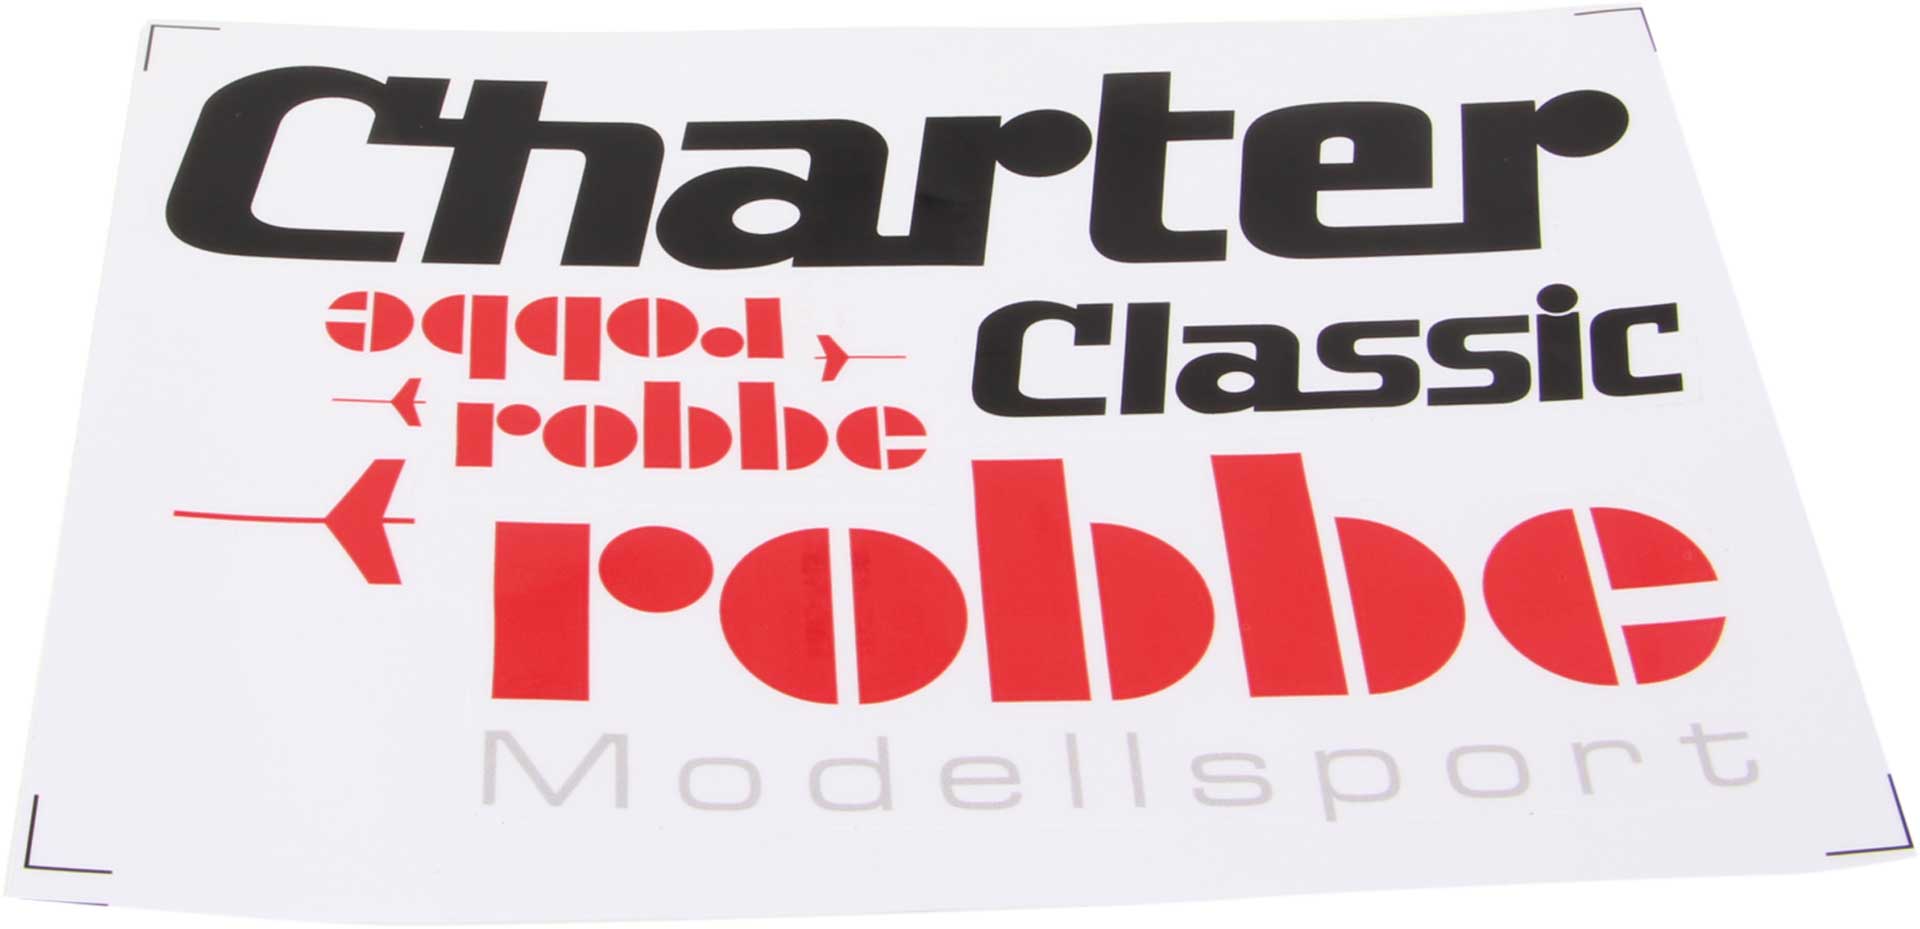 Robbe Modellsport AUTOCOLLANTS CHARTER CLASSIC